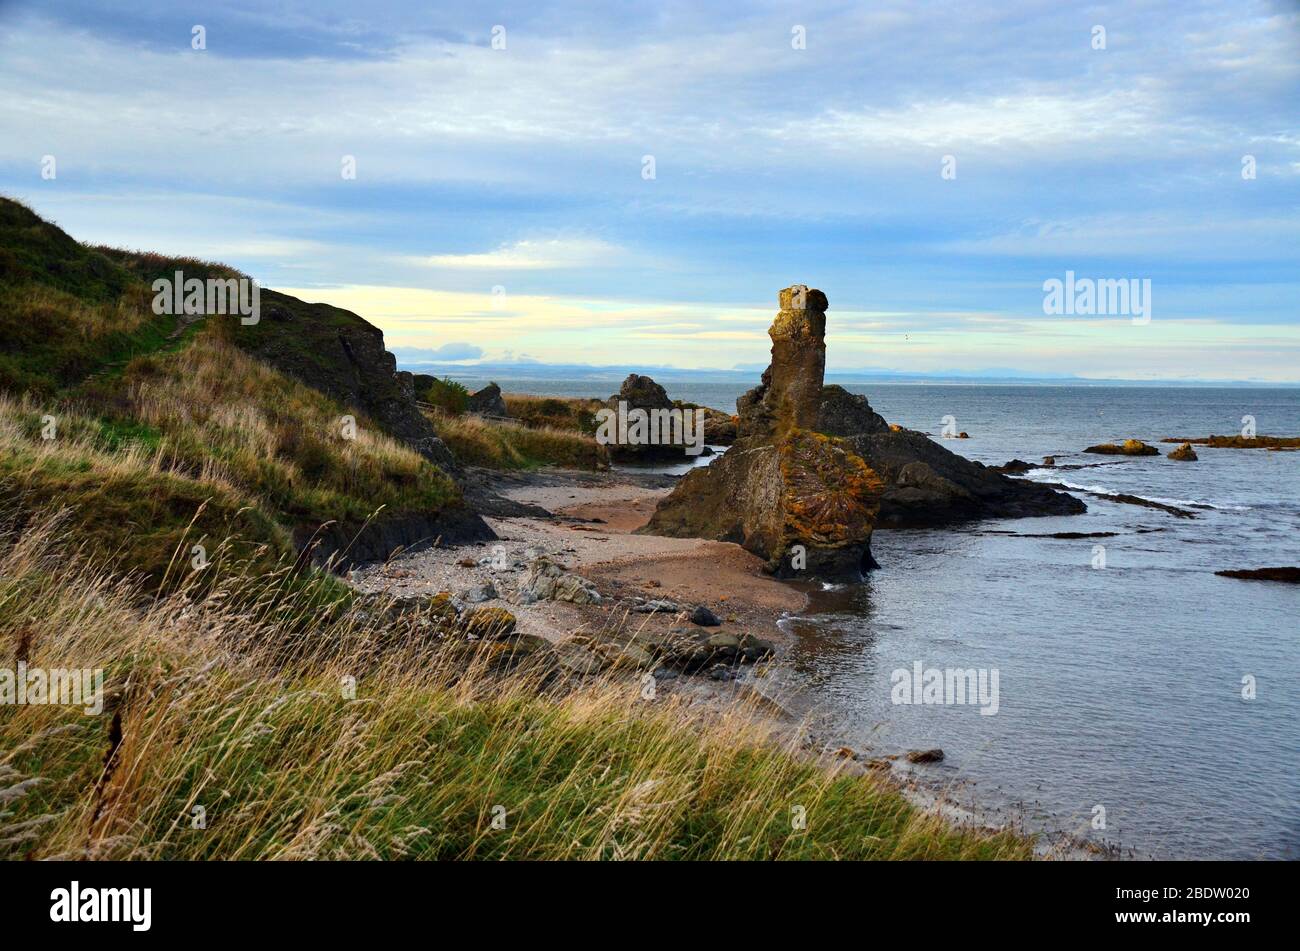 Rock and Spindle en el sendero costero Fife cerca de St, Andrews, Fife, Escocia Foto de stock